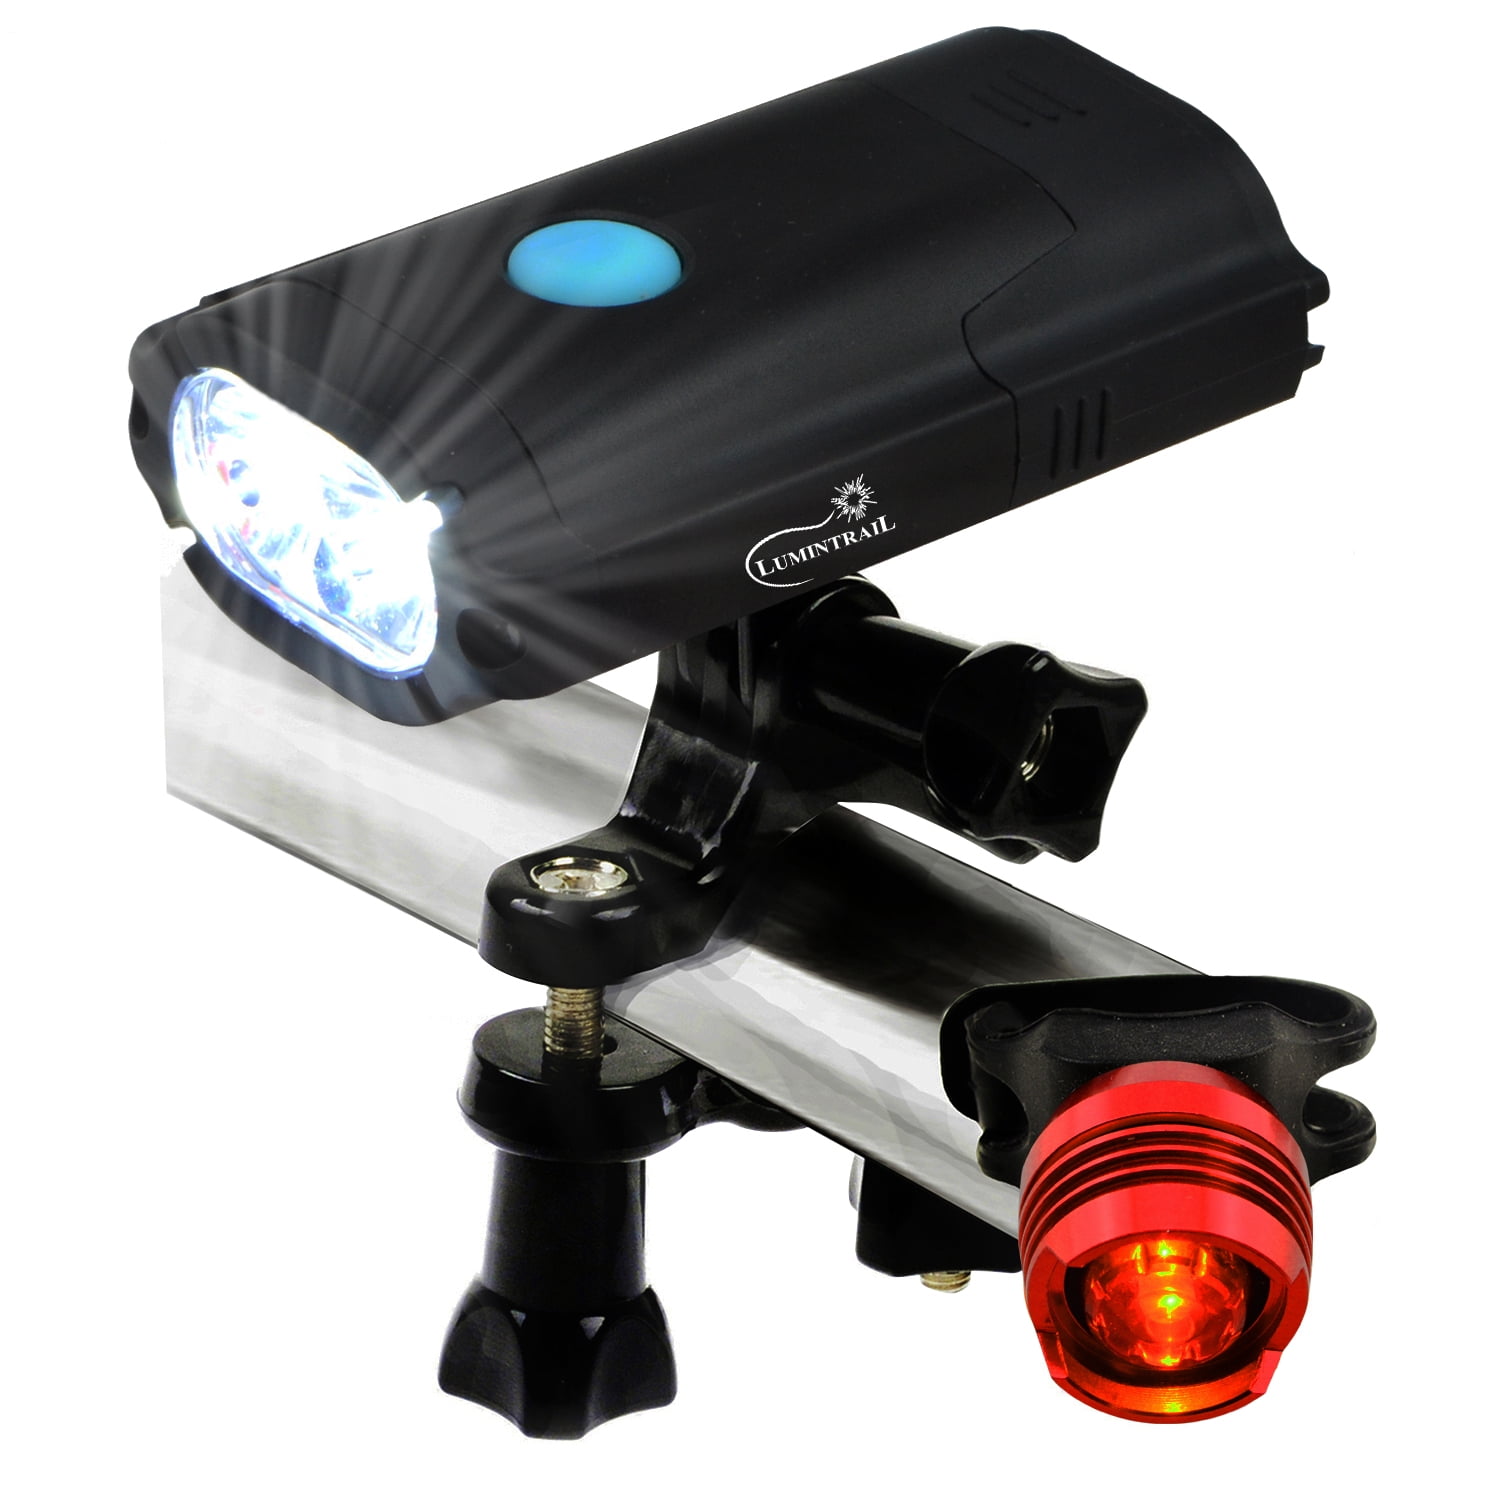 USB Rechargeable Up to 800 Lumen LED Bike Light Headlight Taillight Set Combo